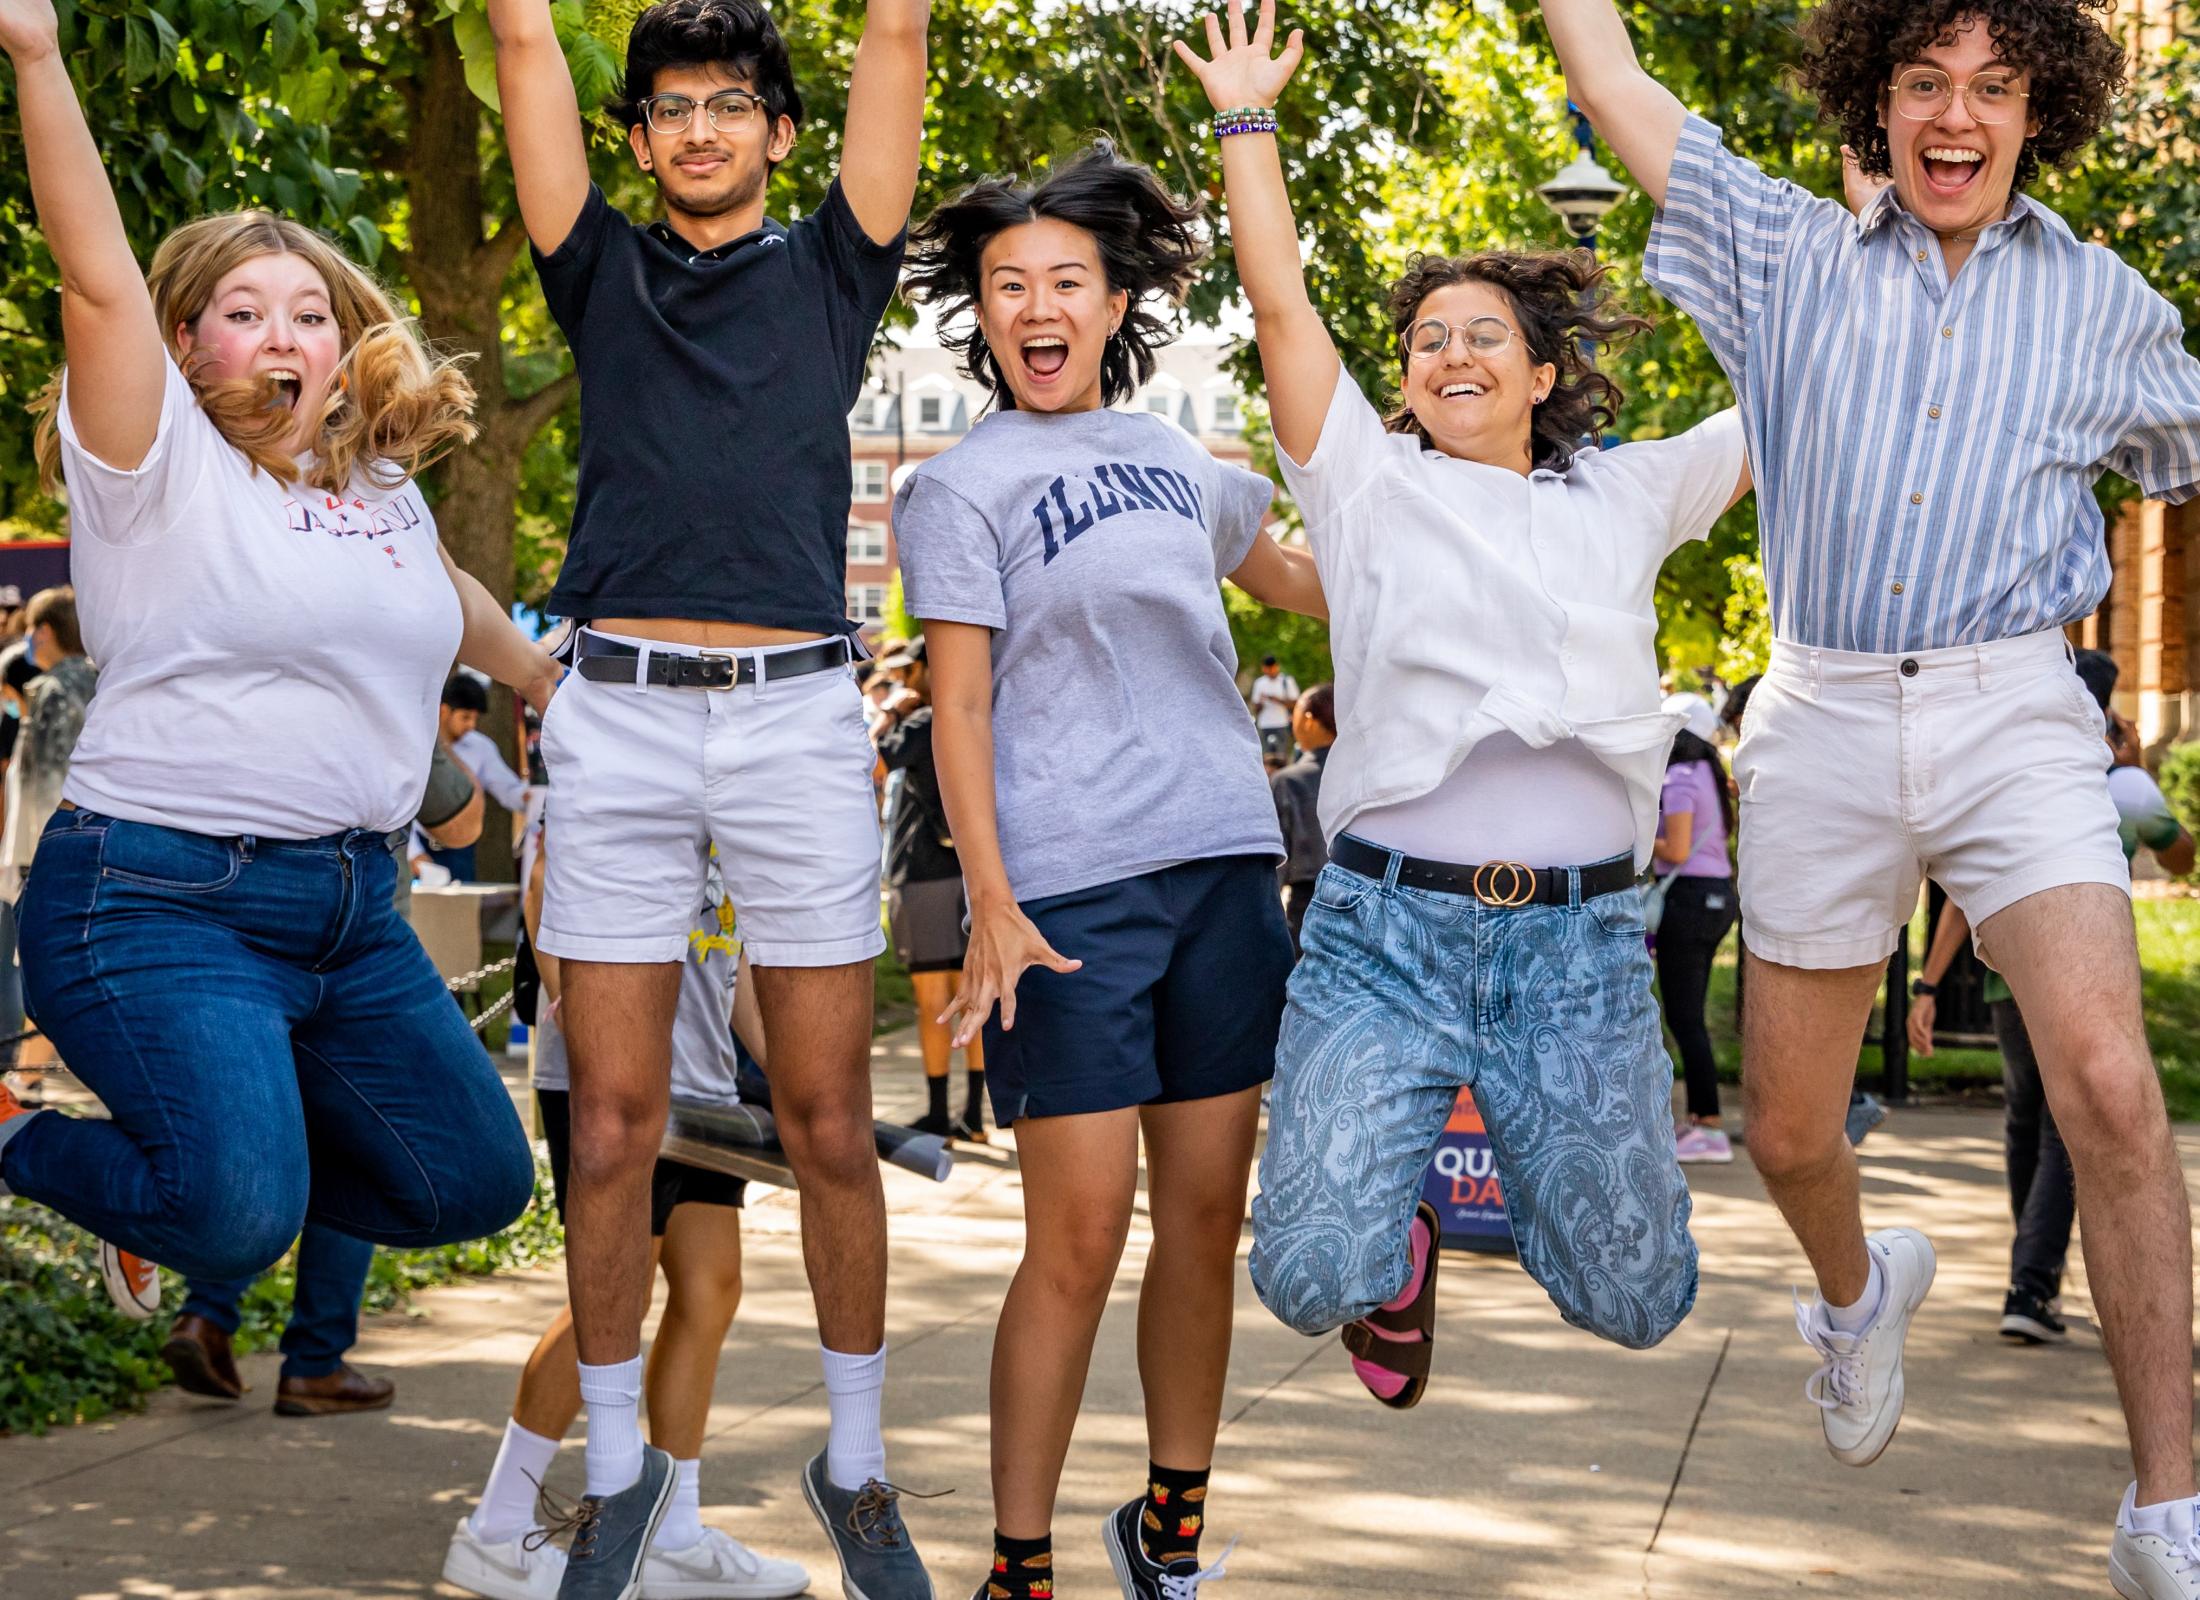 students jumping